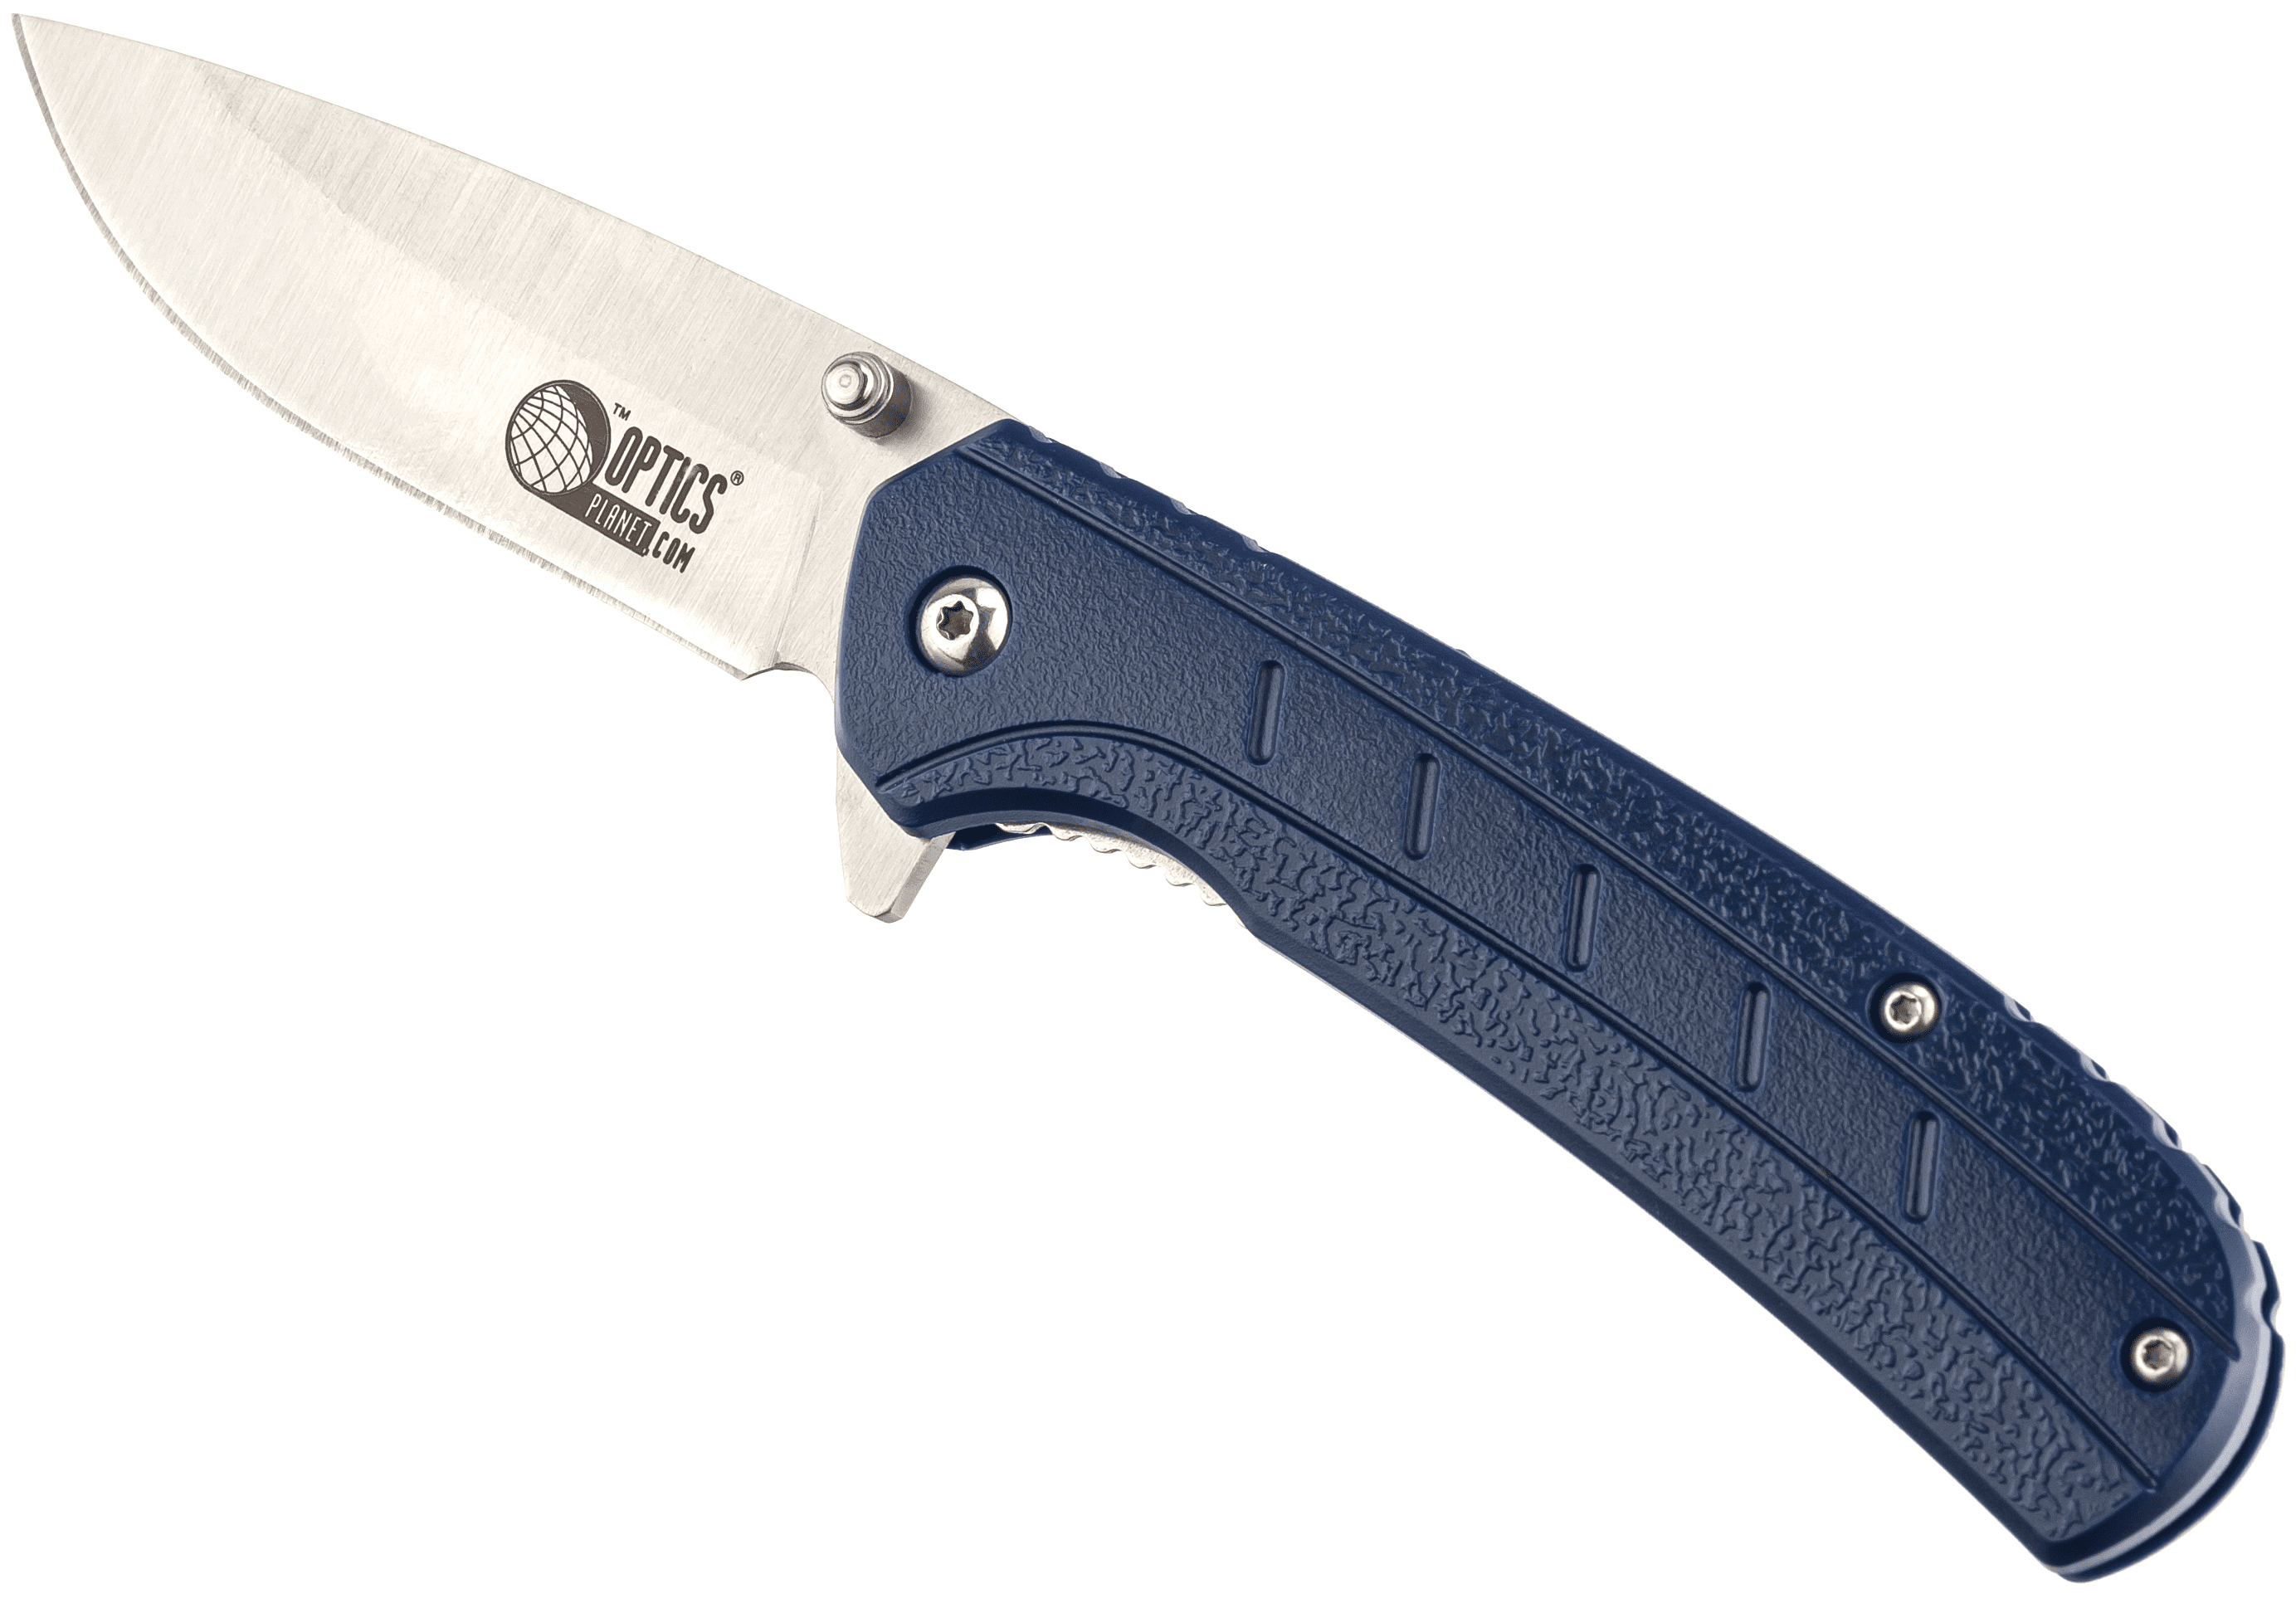 Blue OpticsPlanet Brand Folding Knife